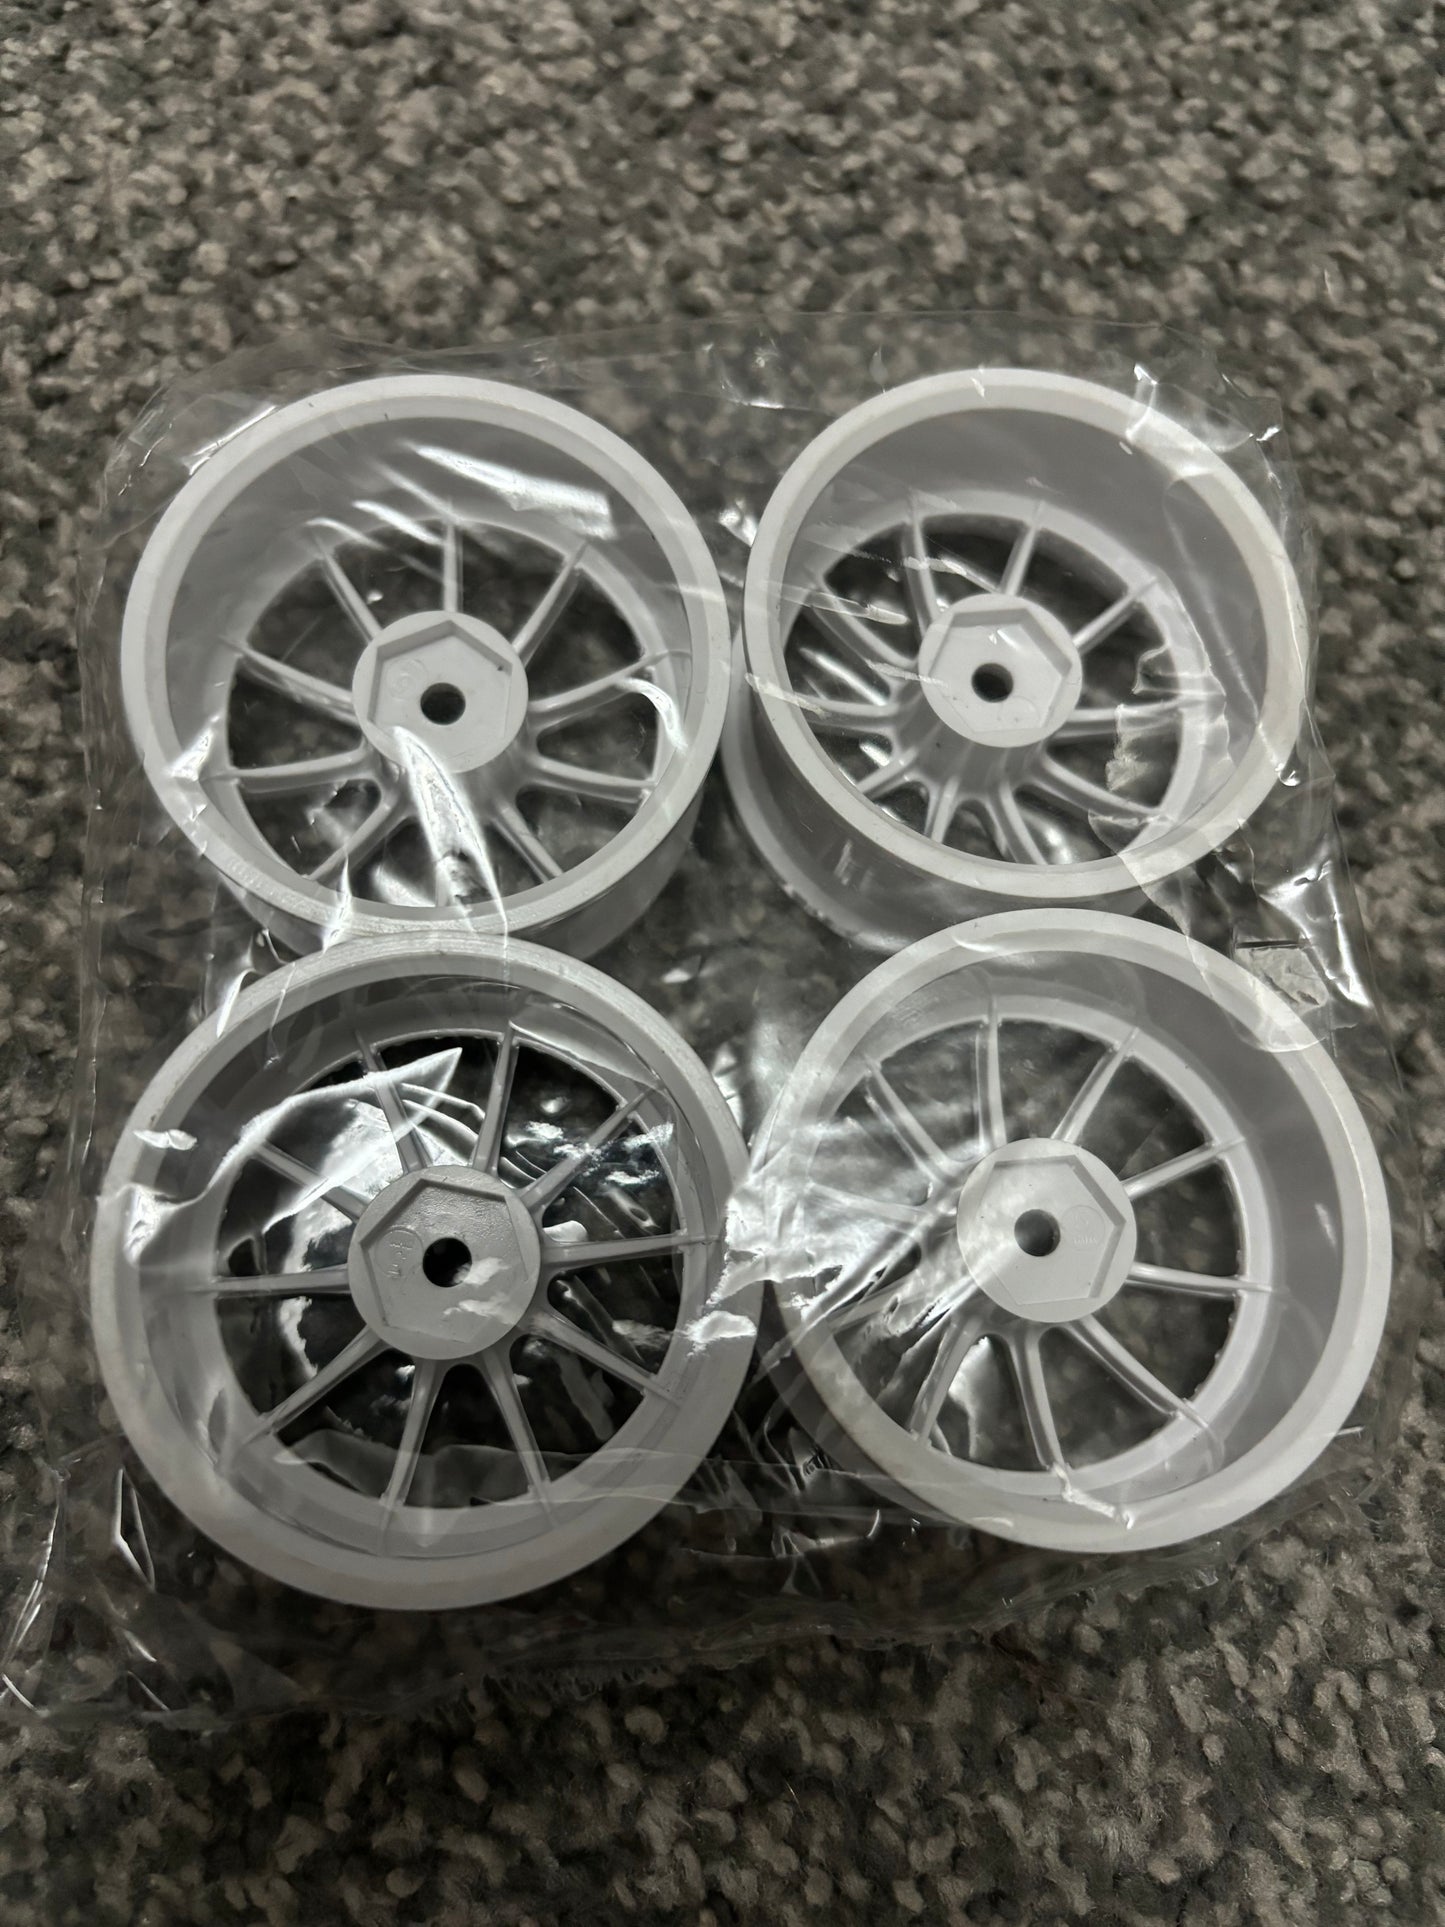 5mm White RC Drift Wheels